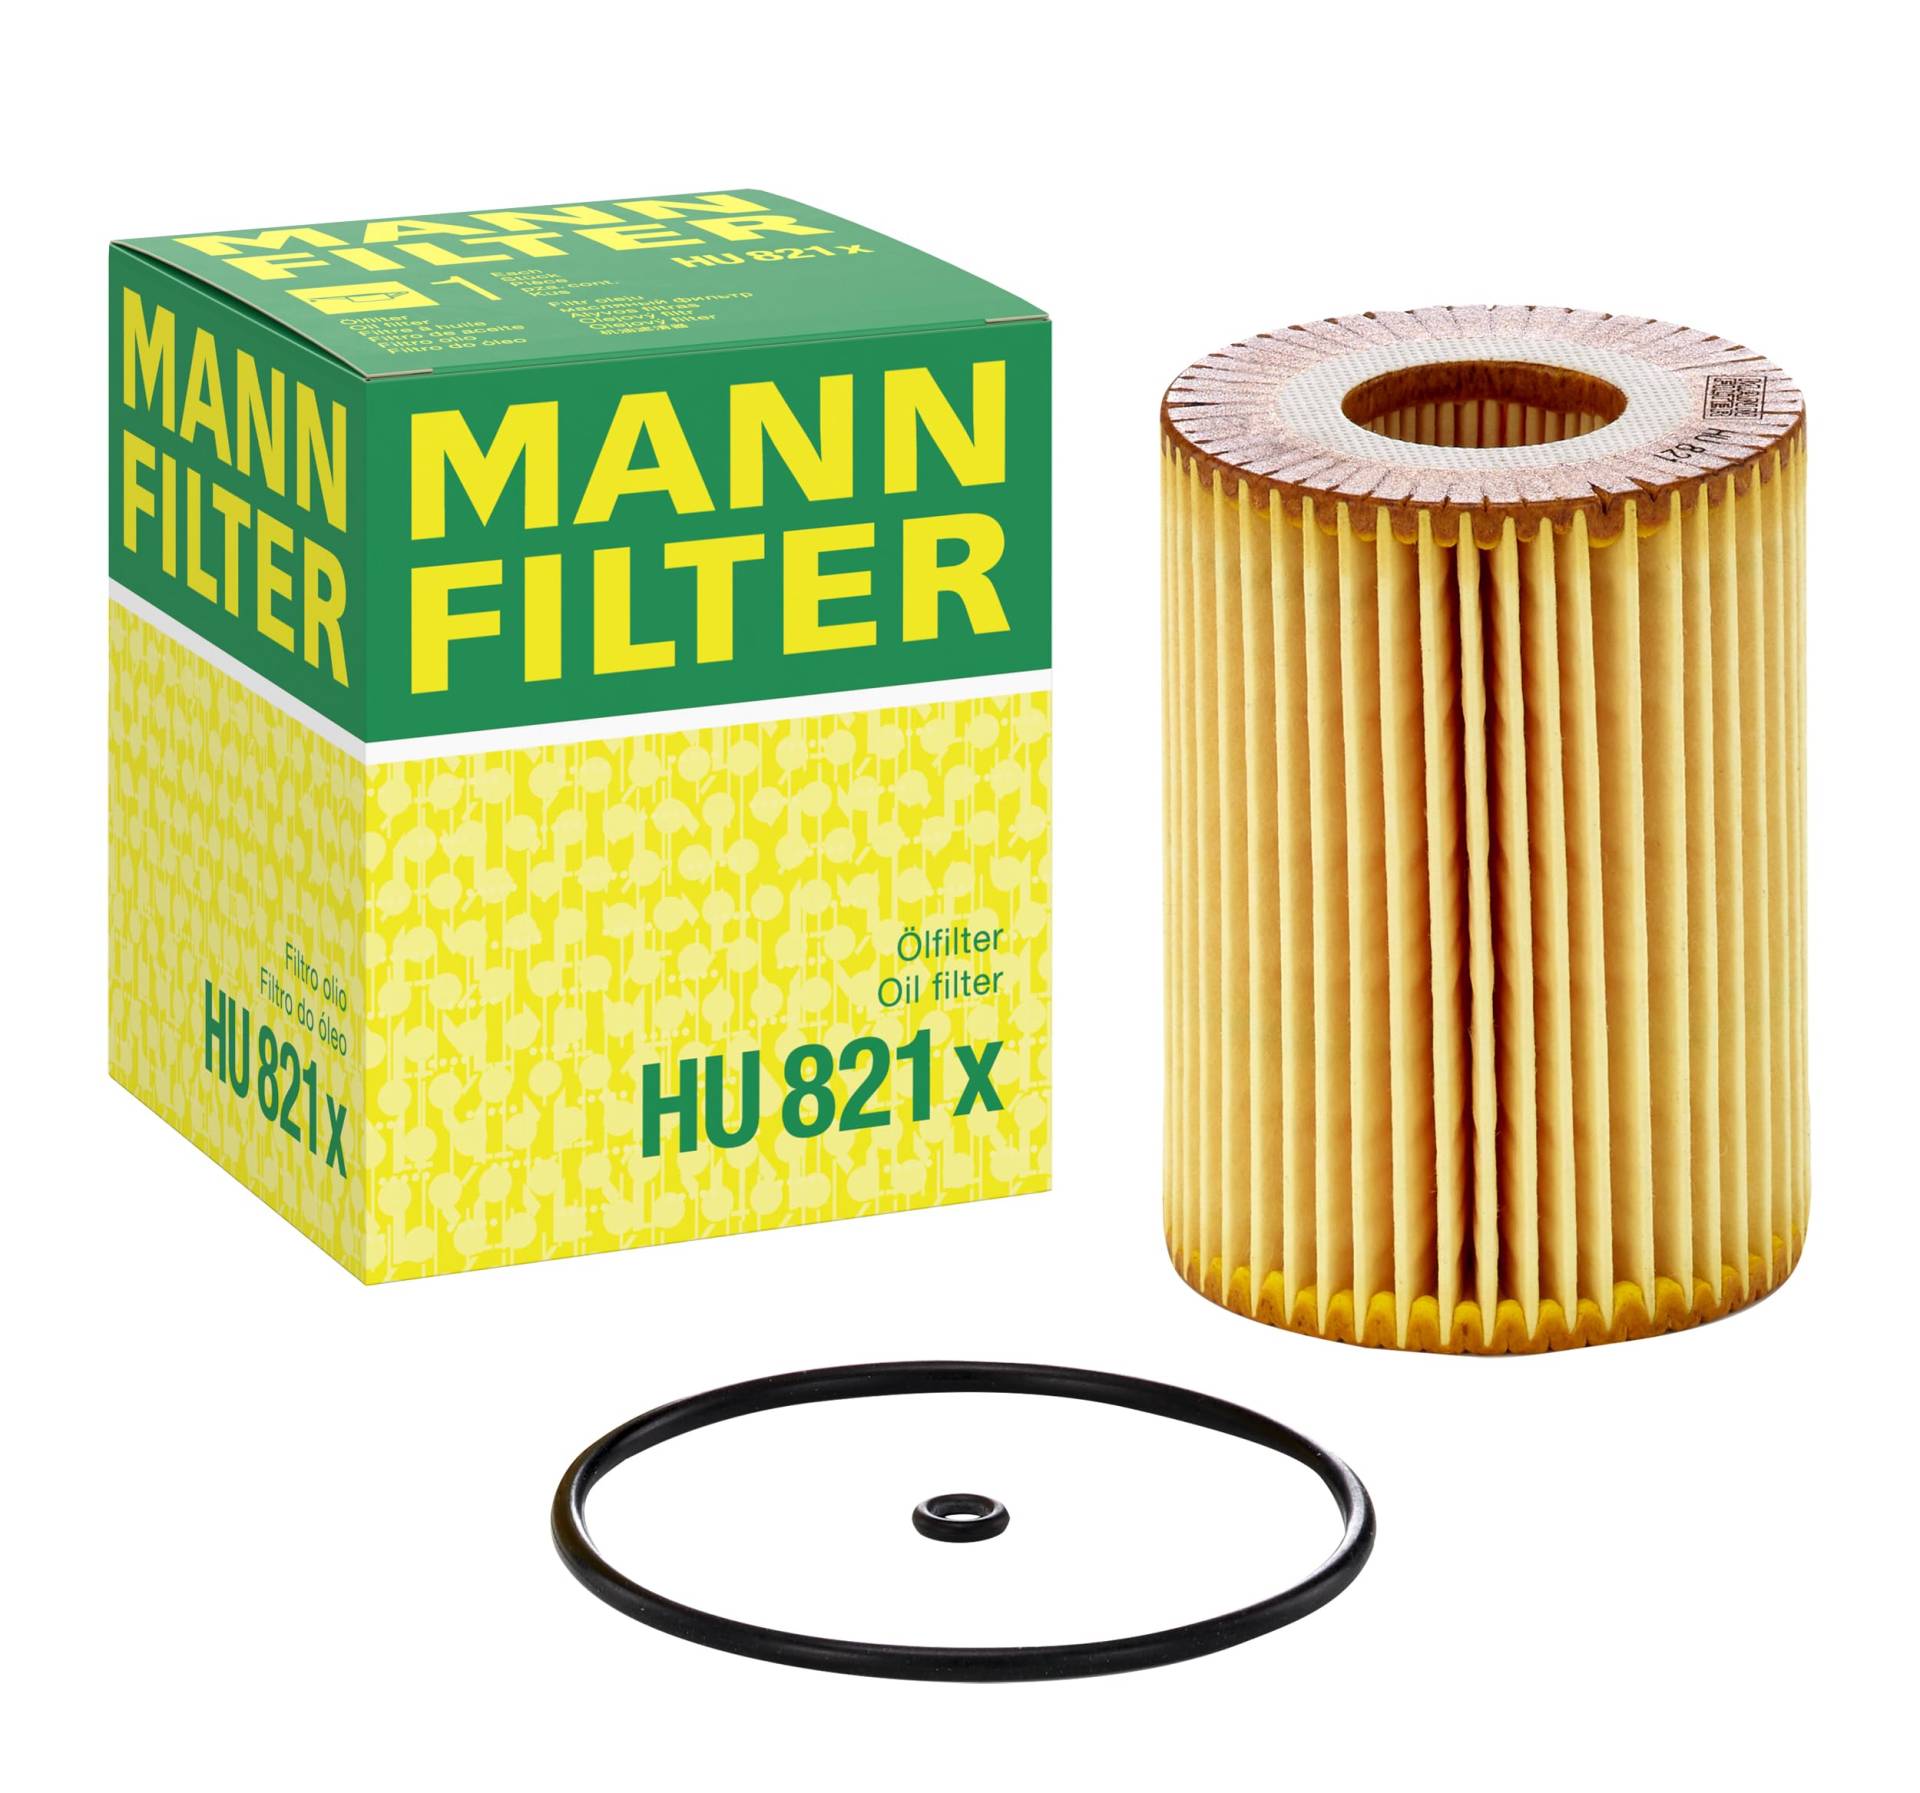 F/ür PKW Original MANN-FILTER /Ölfilter HU 920 X /Ölfilter Satz mit Dichtung Dichtungssatz